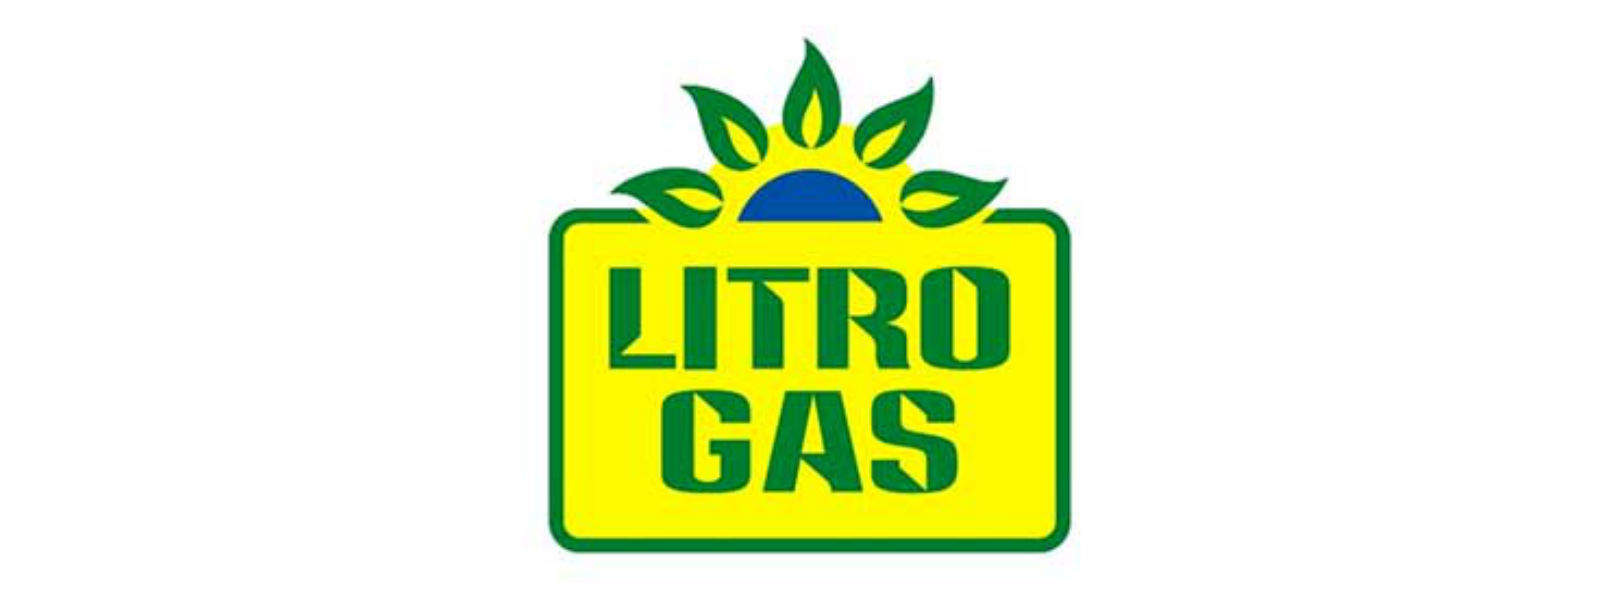 3,500 MT of Gas to reach Sri Lanka